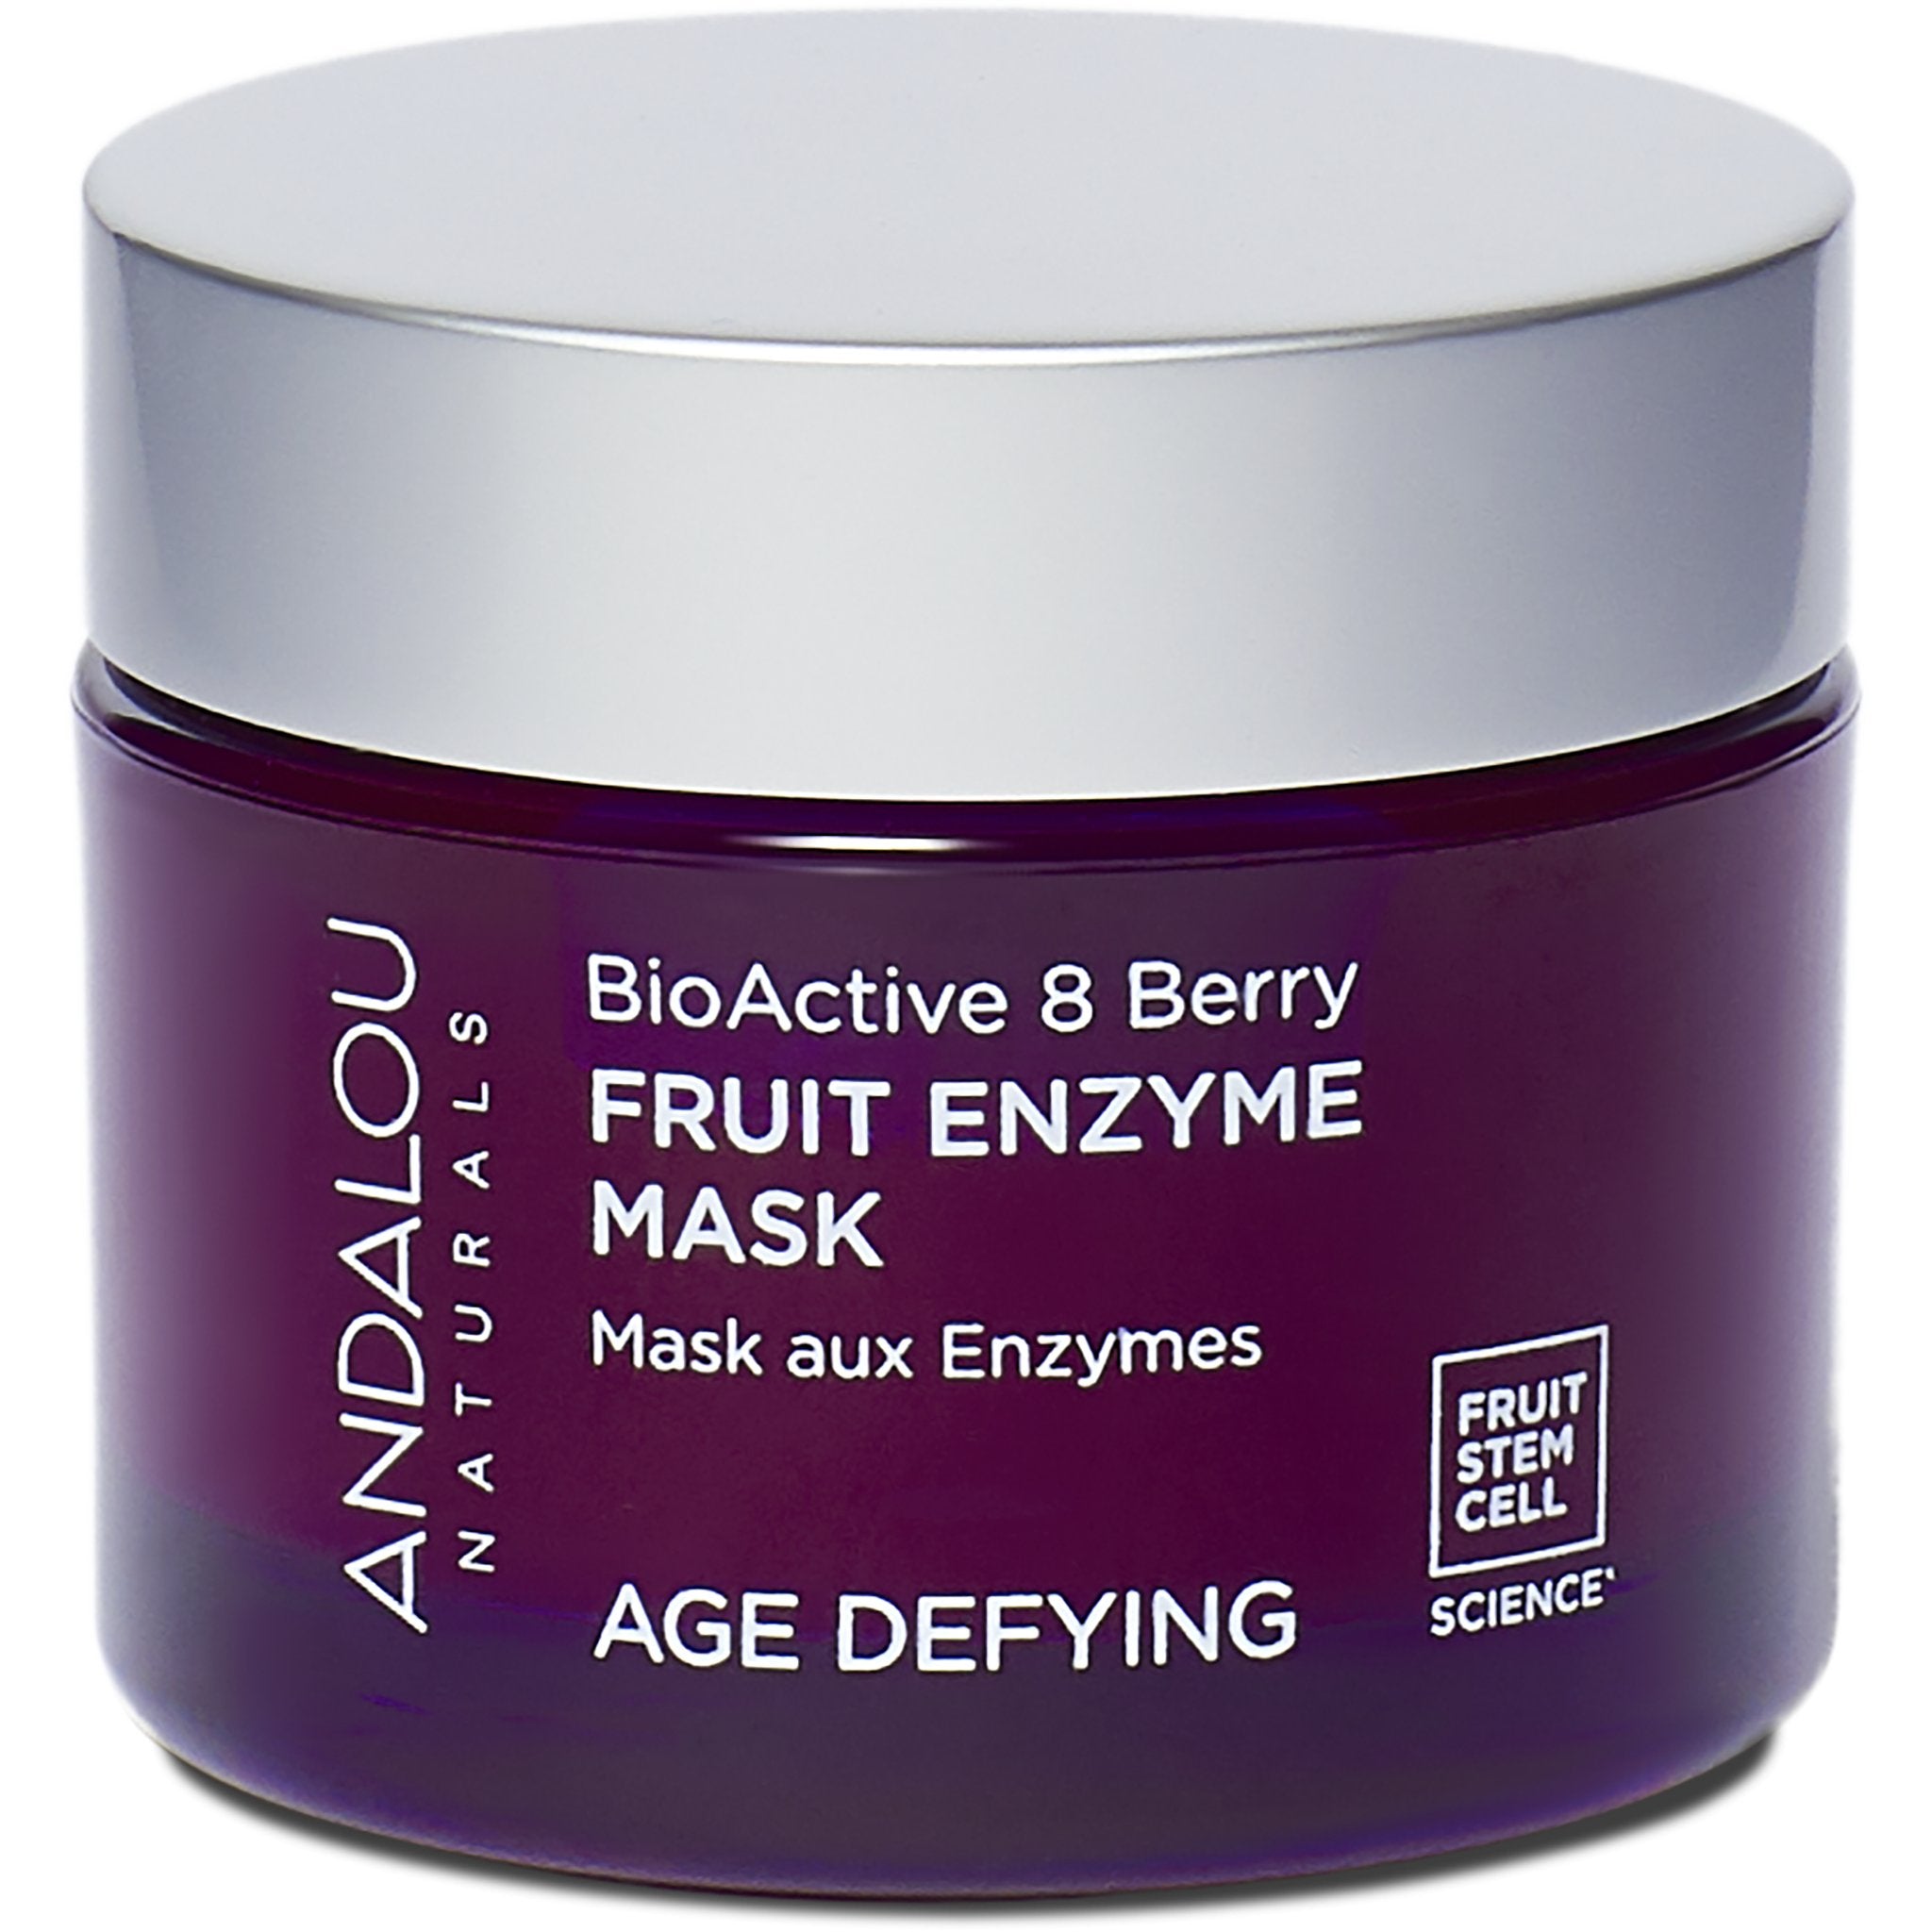 Age Defying BioActive Berry Fruit Enzyme Mask - mypure.co.uk